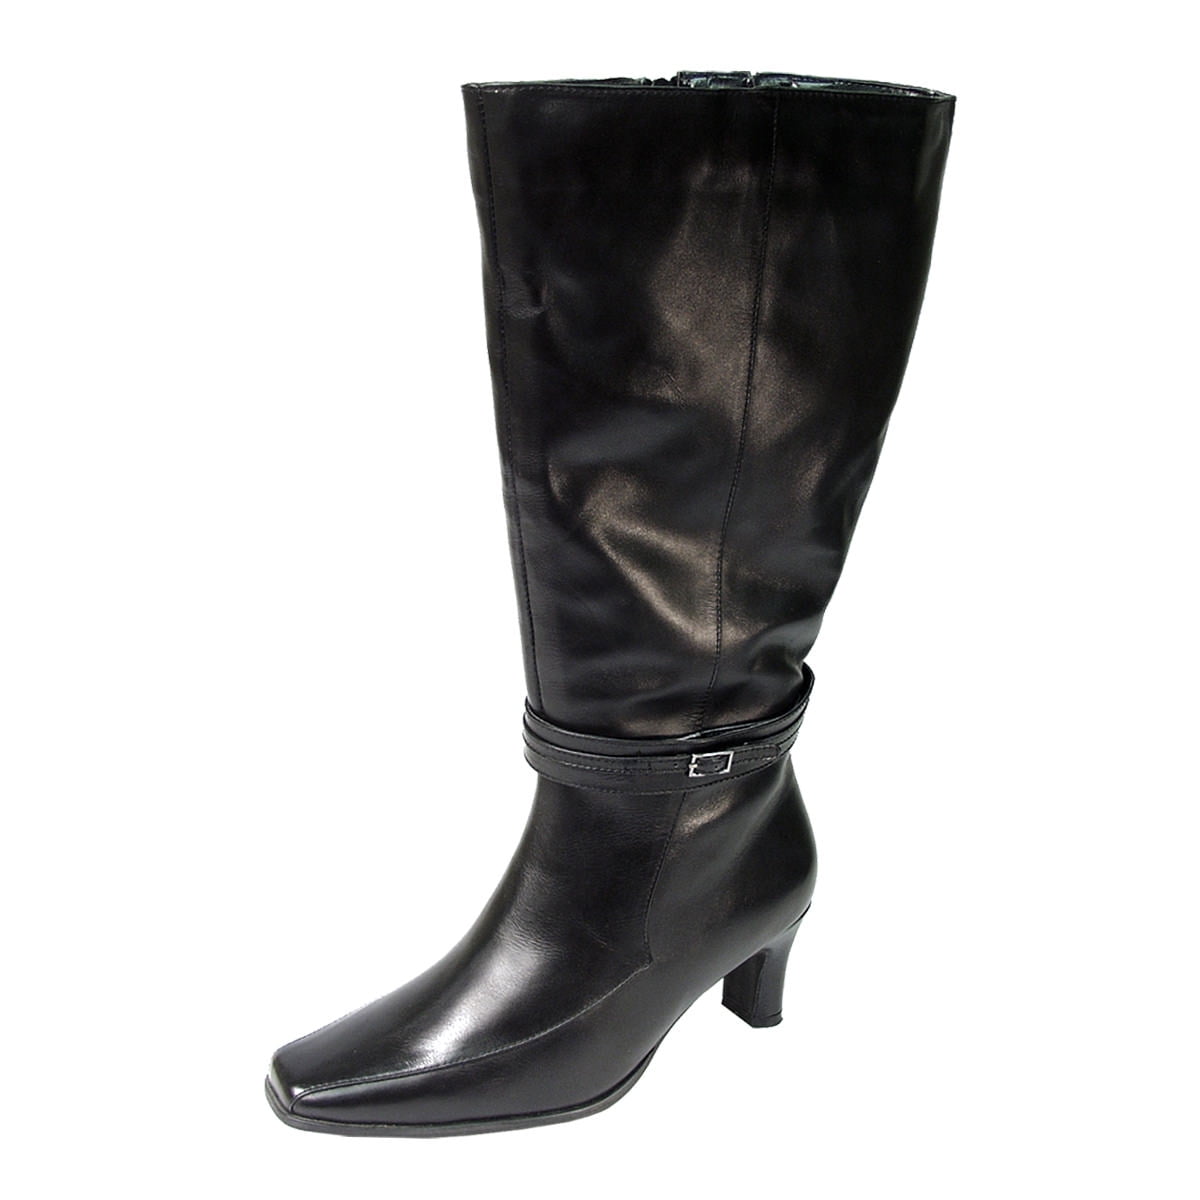 wide width dress boots